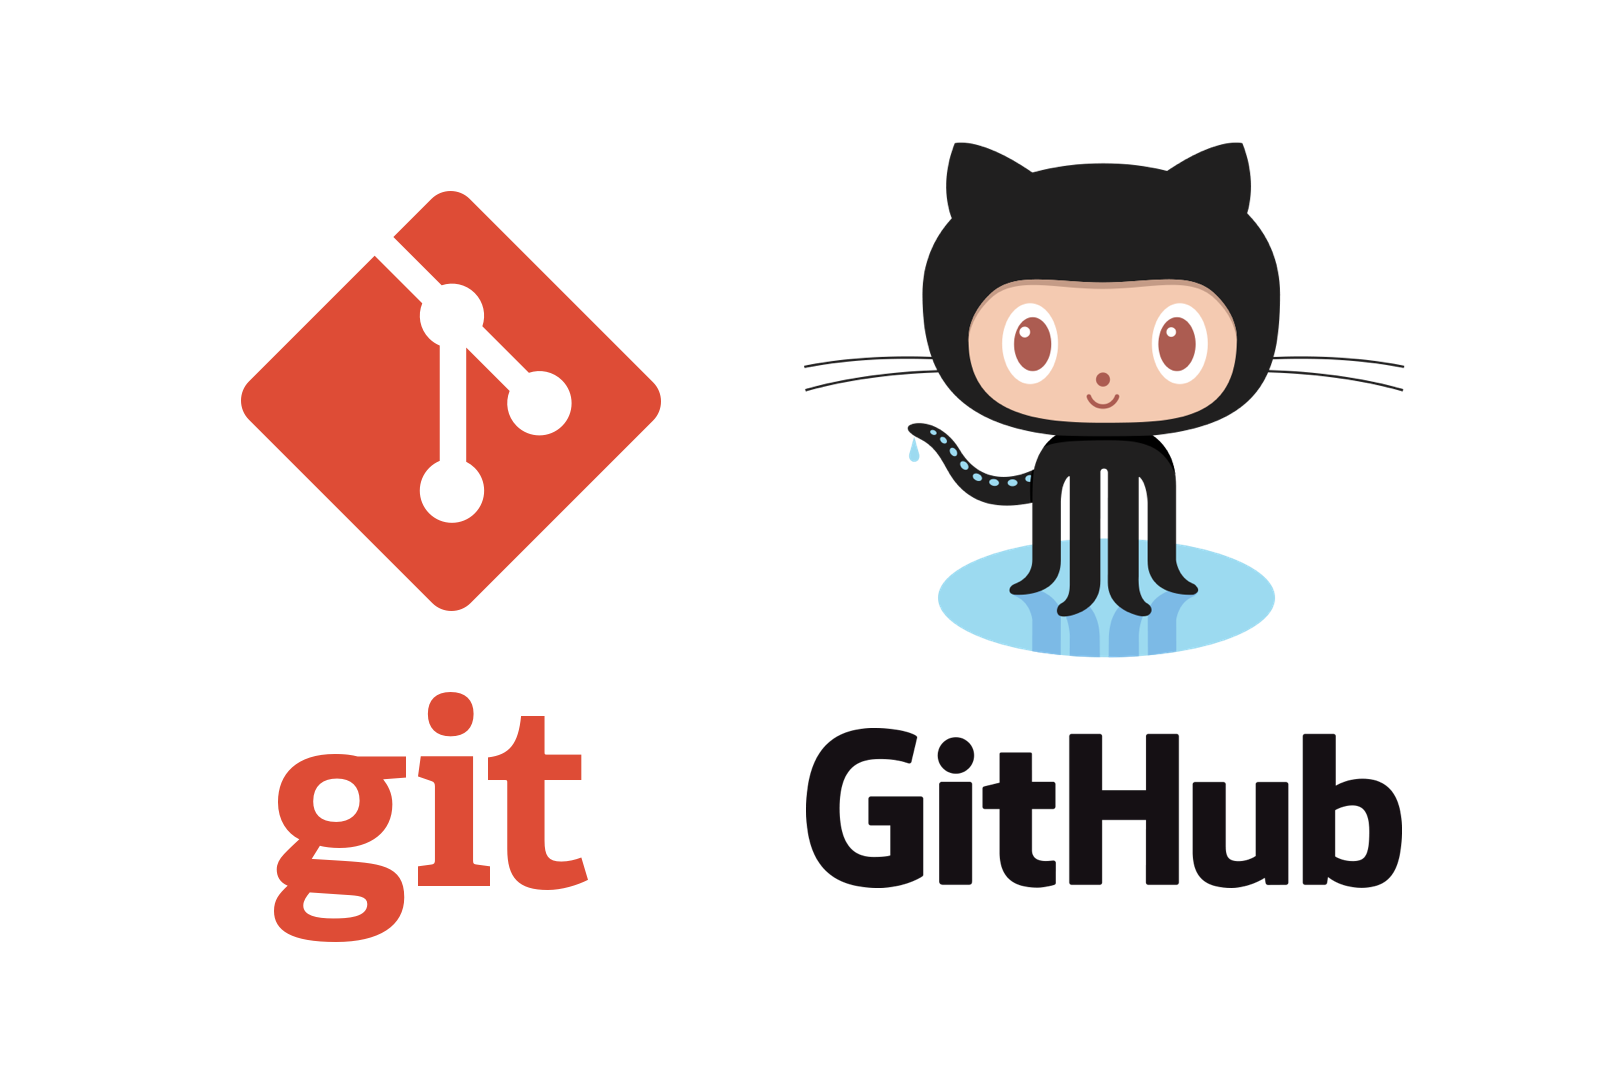 Cs github. Логотип GITHUB. Гит и гитхаб. GITHUB без фона. Git GITHUB.